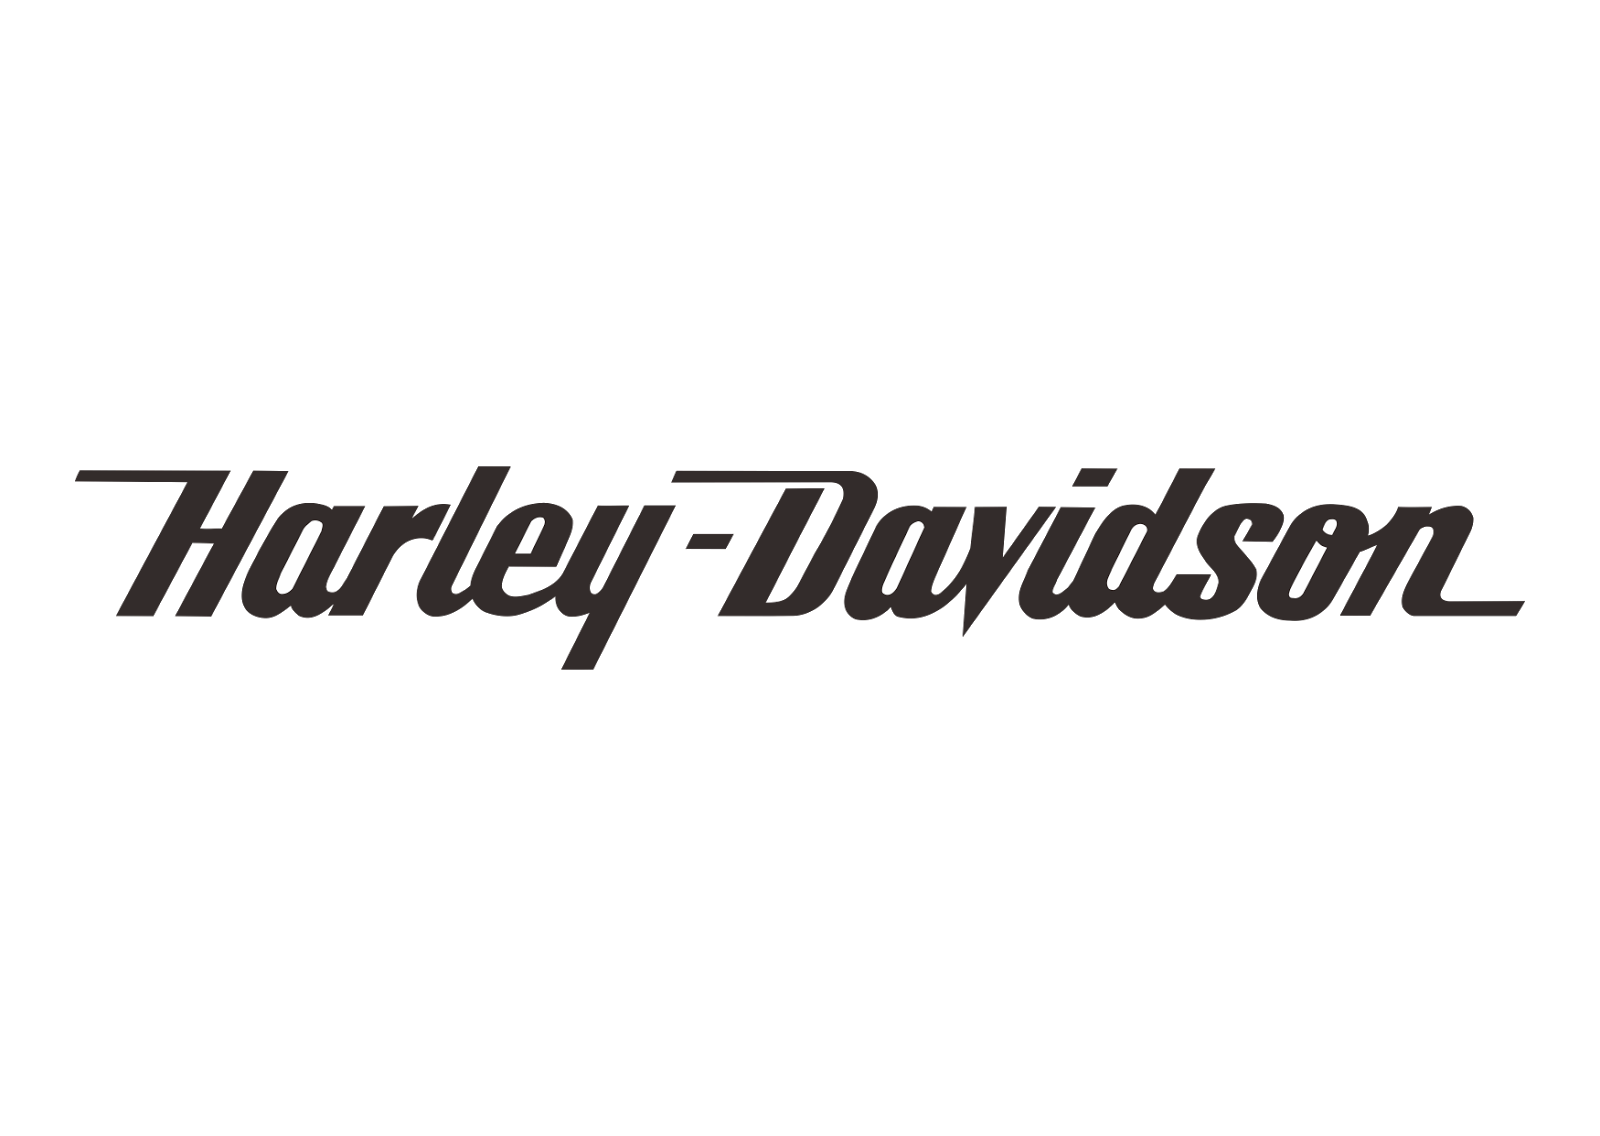 harley davidson text png logo vector black white #4929